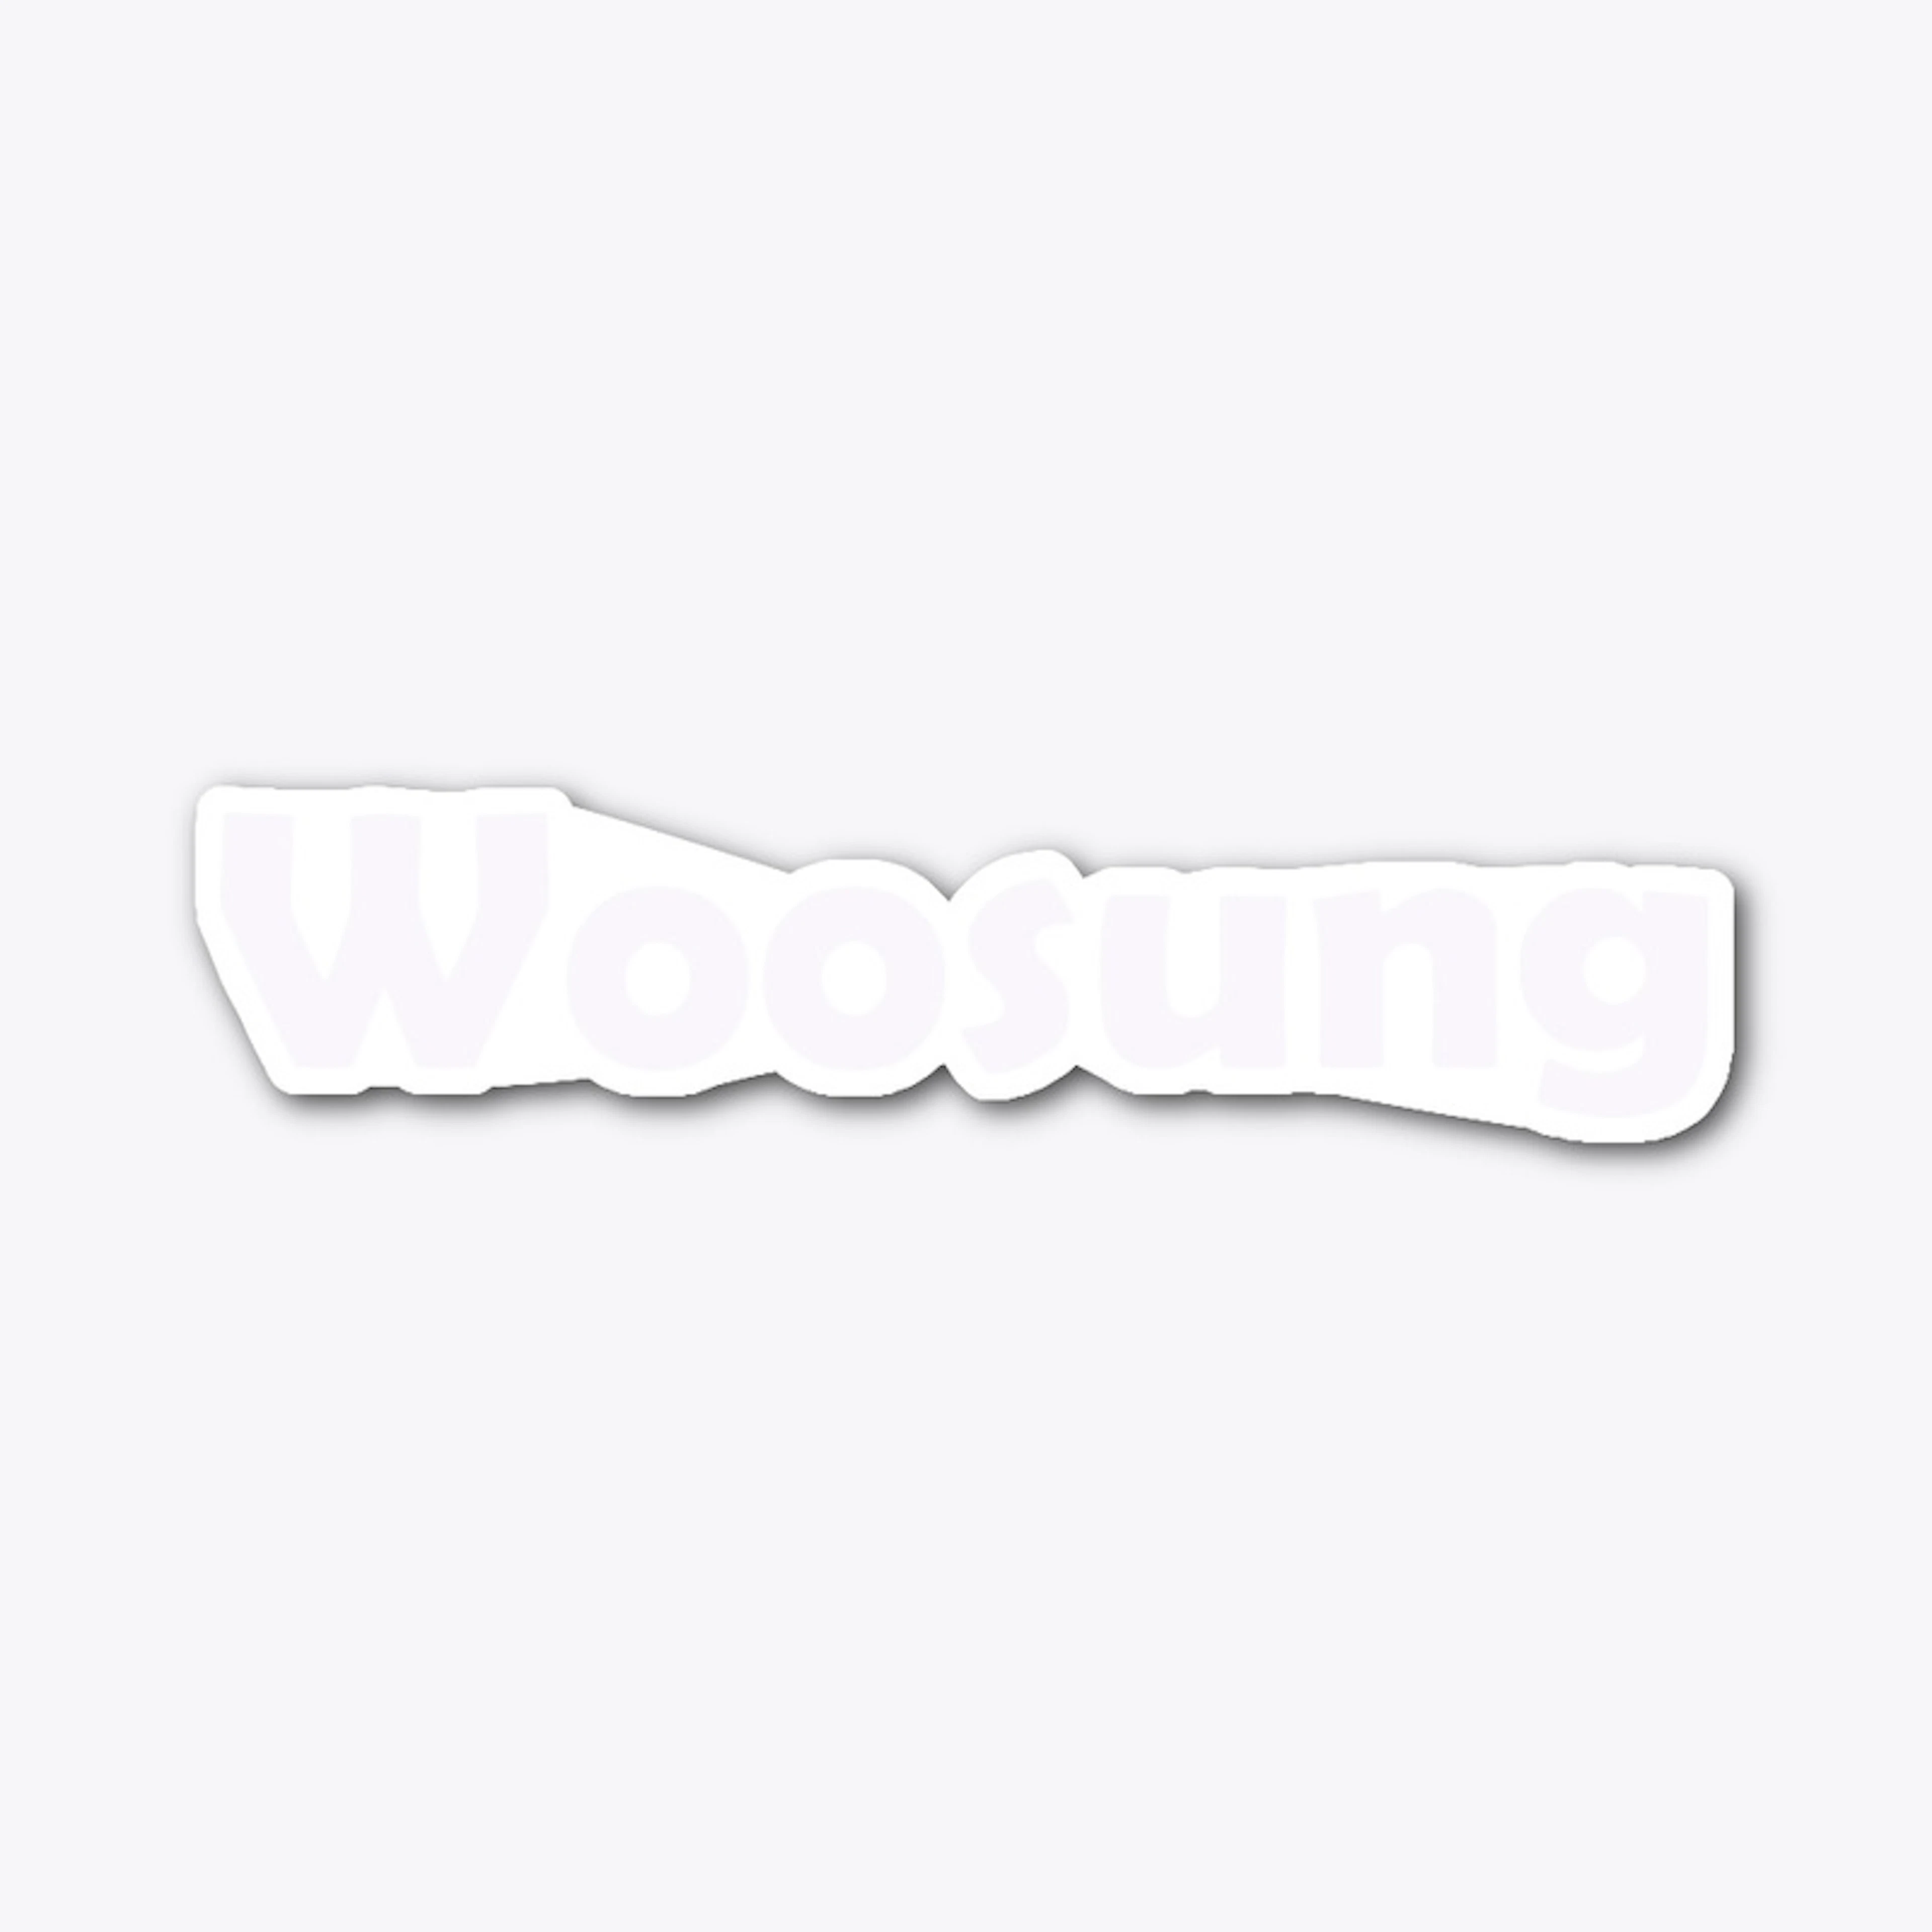 Woosung merch Logo